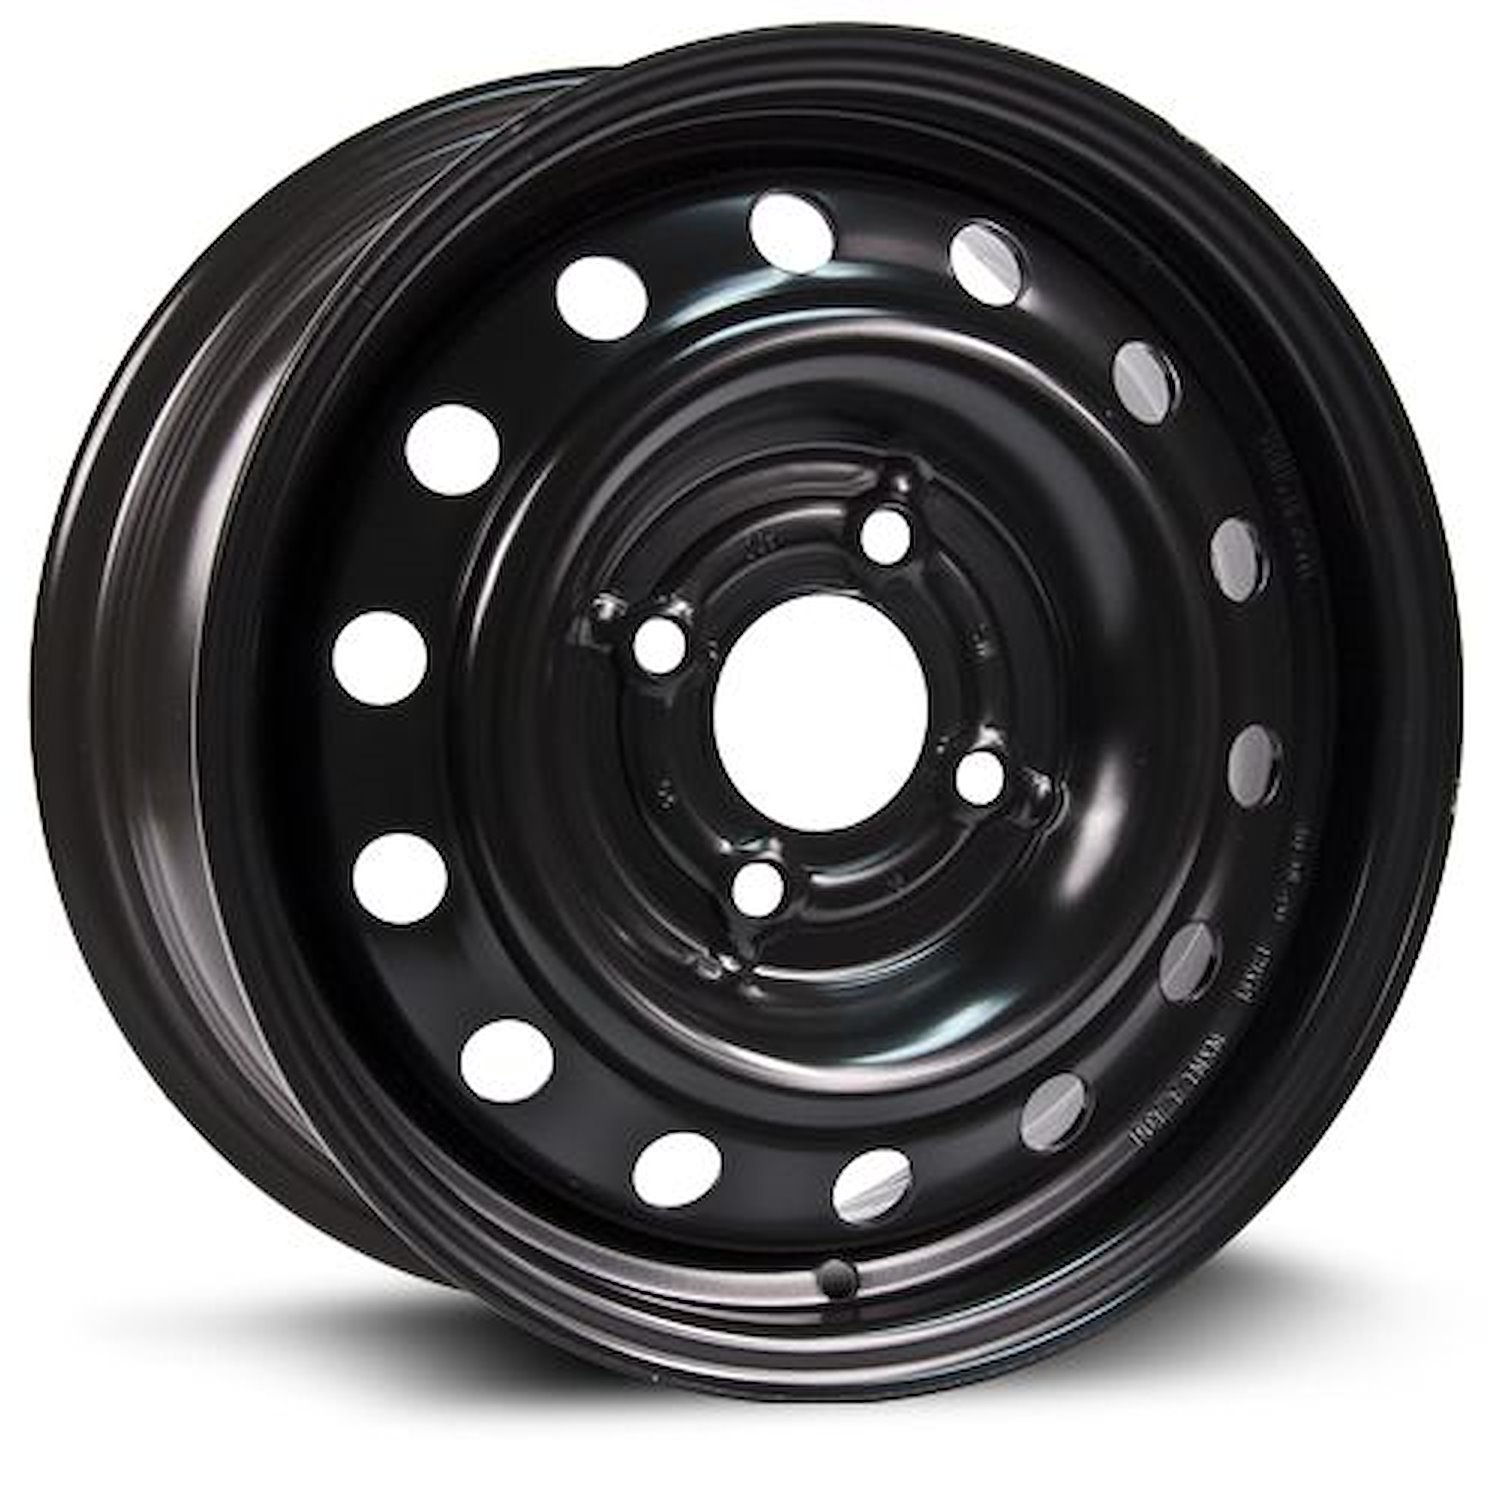 X46645 Steel Wheel [Size: 16" x 6.50"] Black Finish